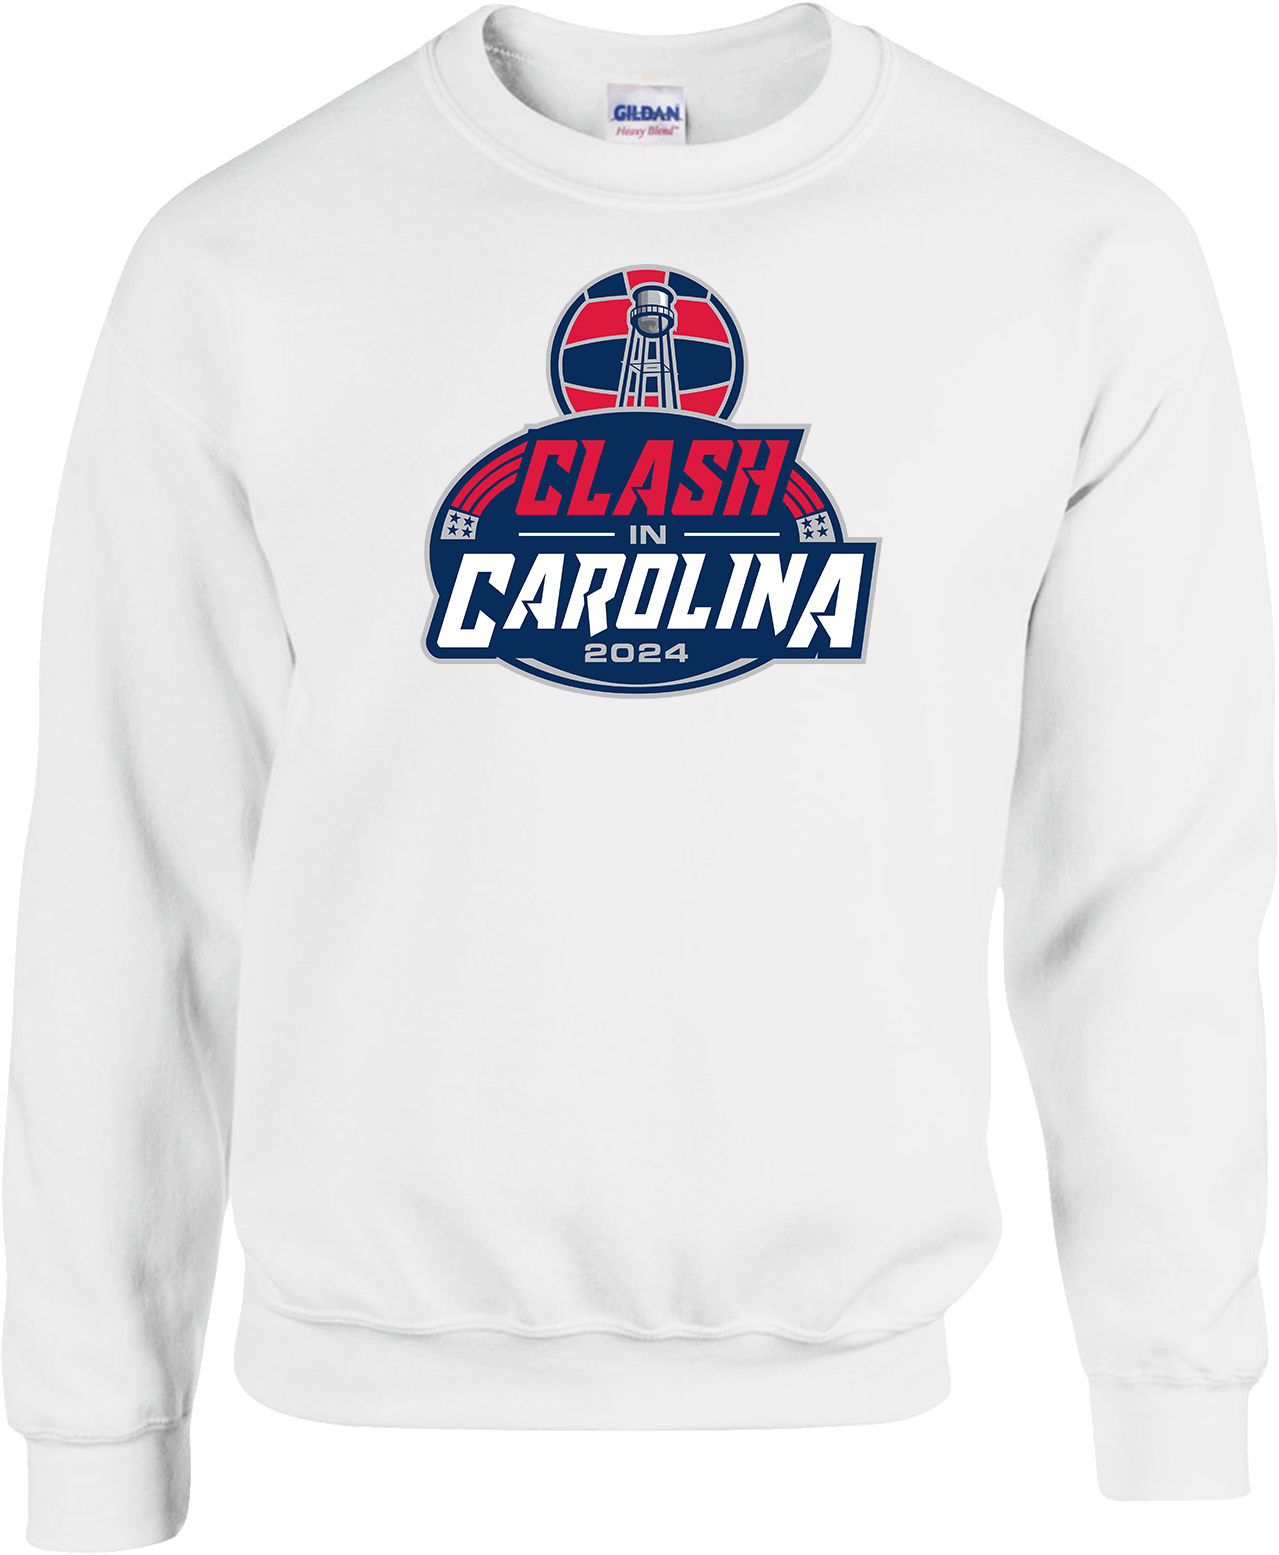 Copy of Crew Sweatershirt - 2024 Clash In Carolina